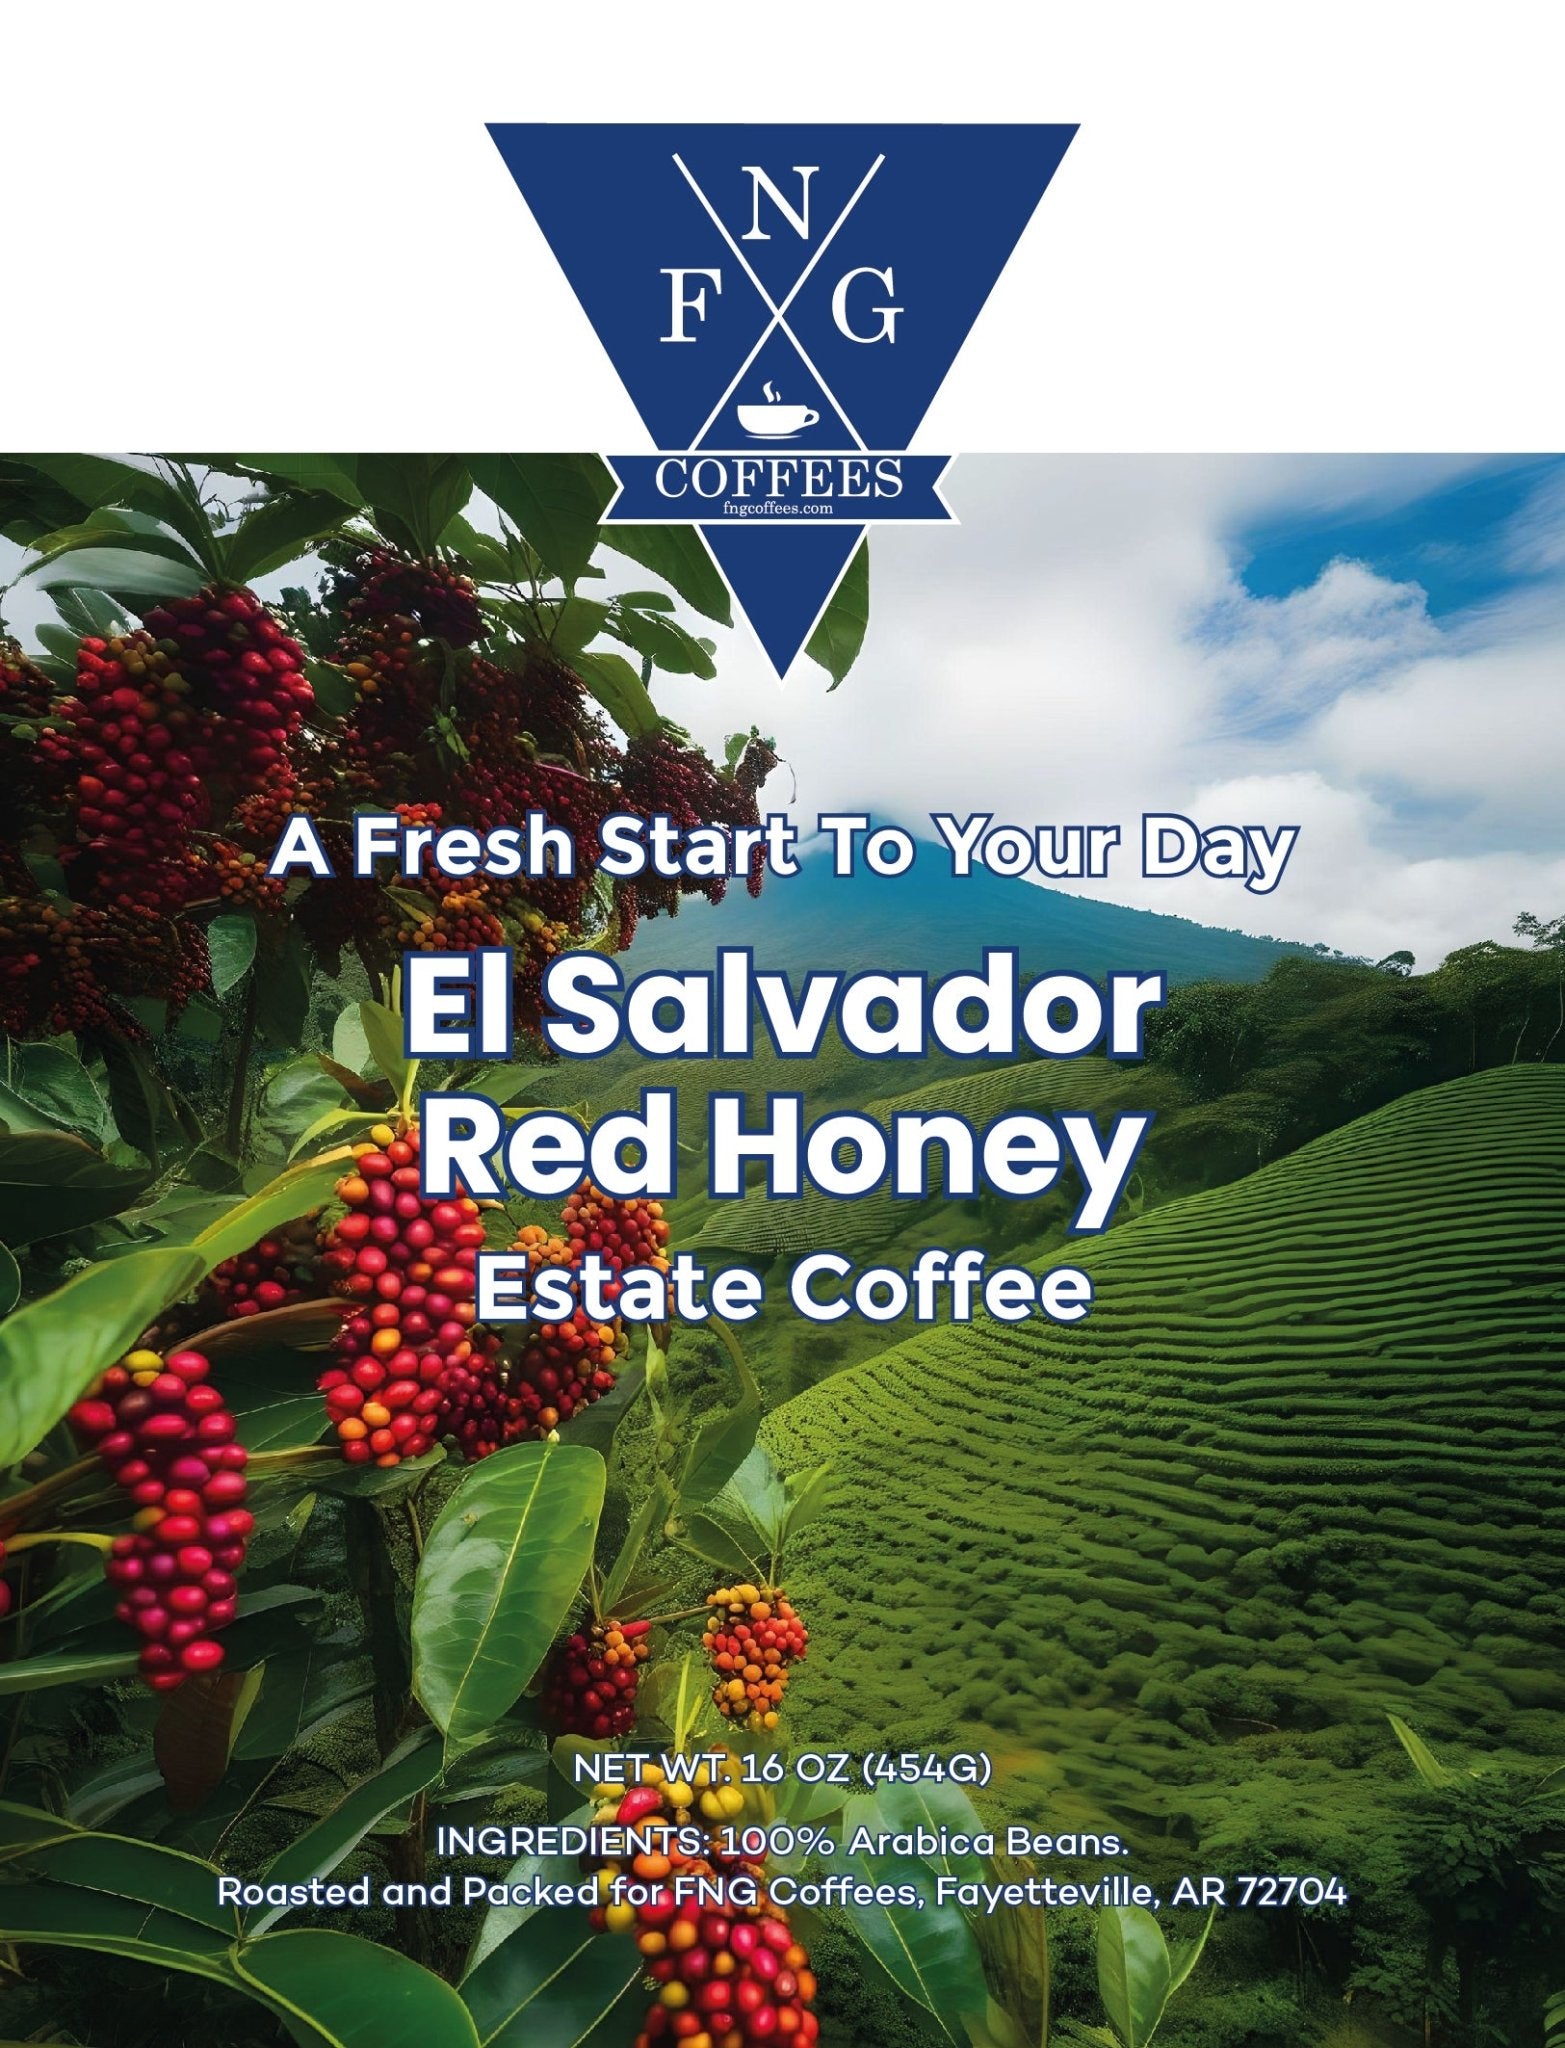 El Salvador Red Honey